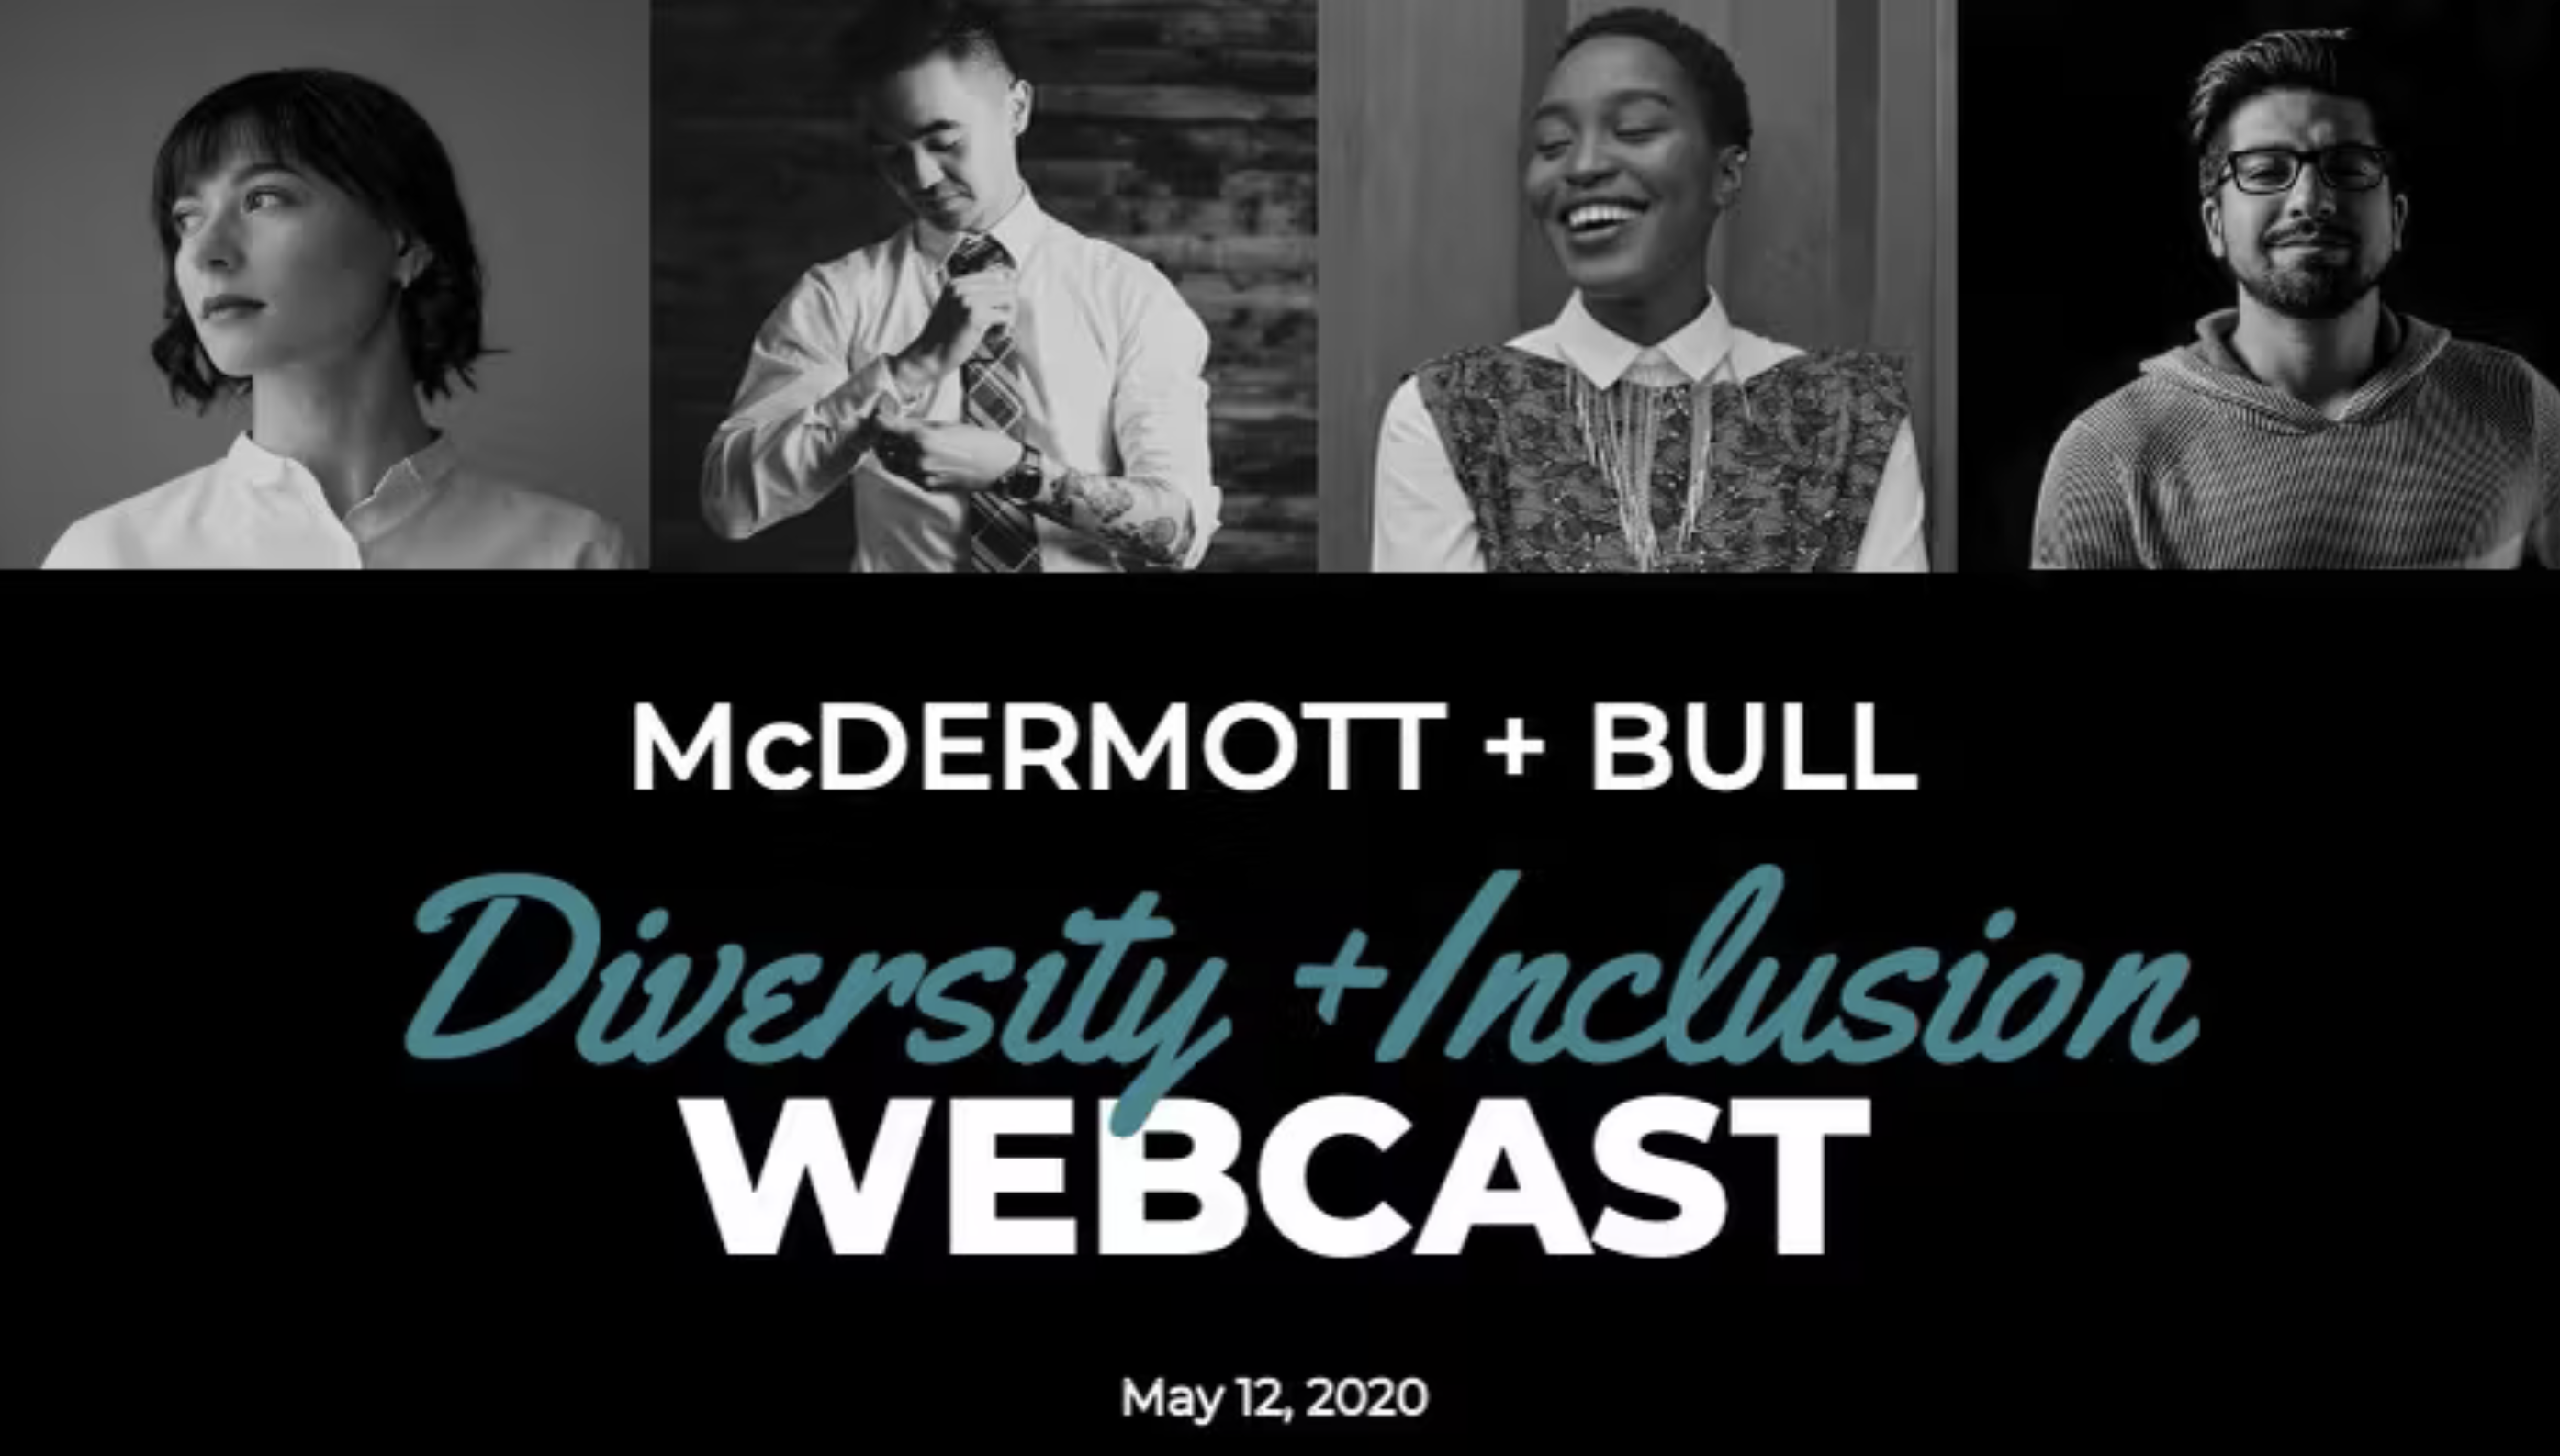 McDermott + Bull 2020 Diversity + Inclusion Webcast